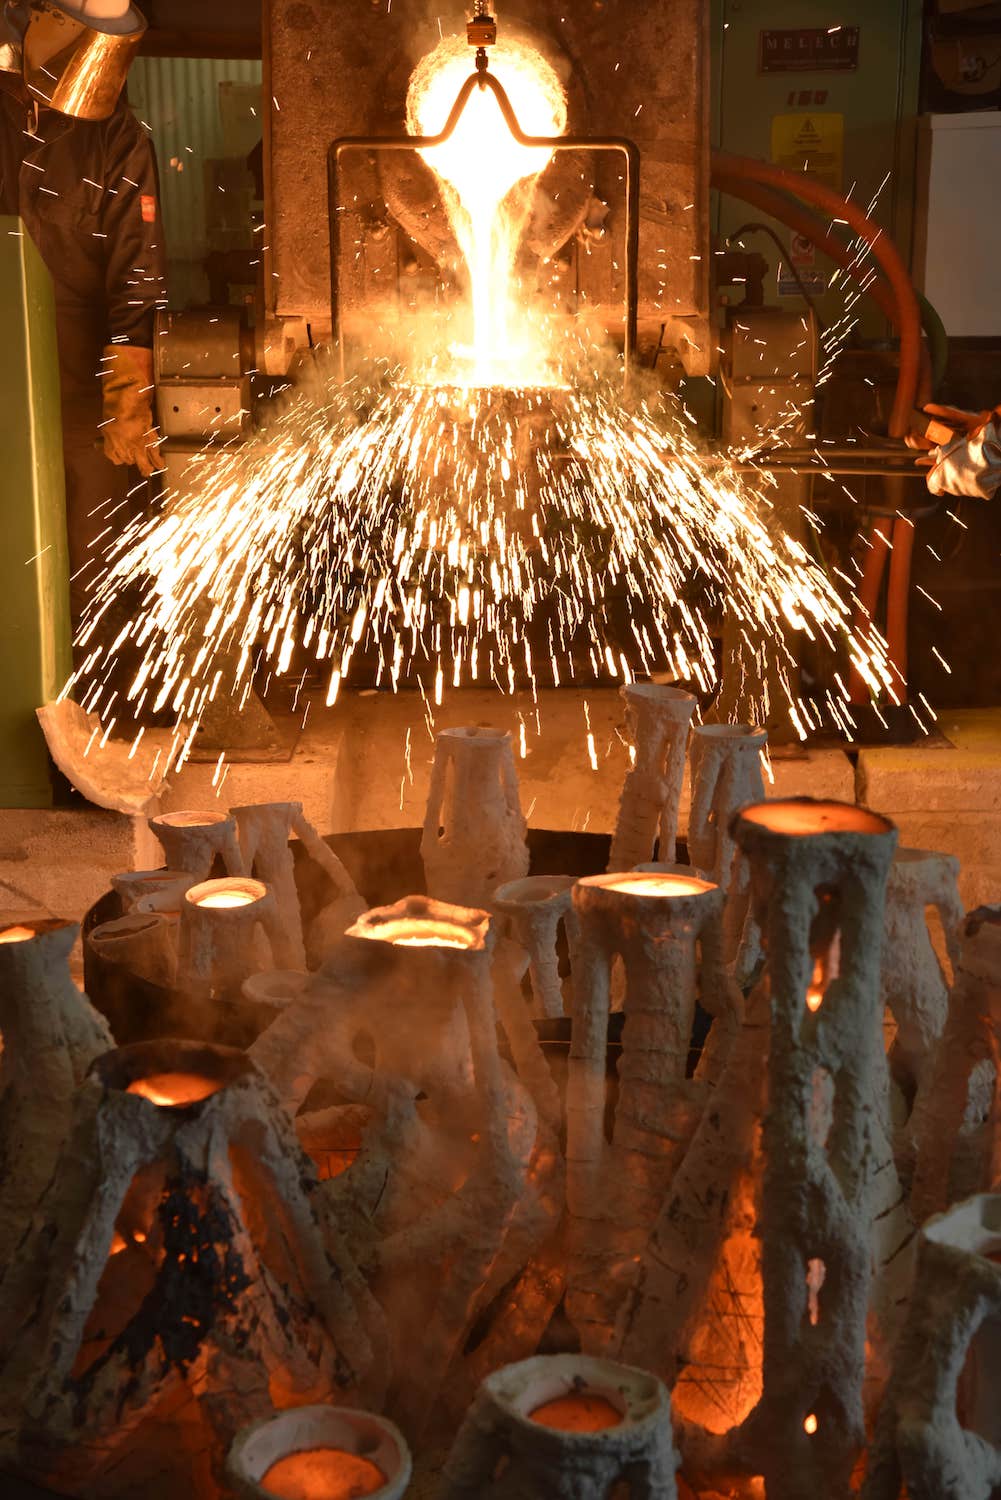 sparks flying during bronze casting